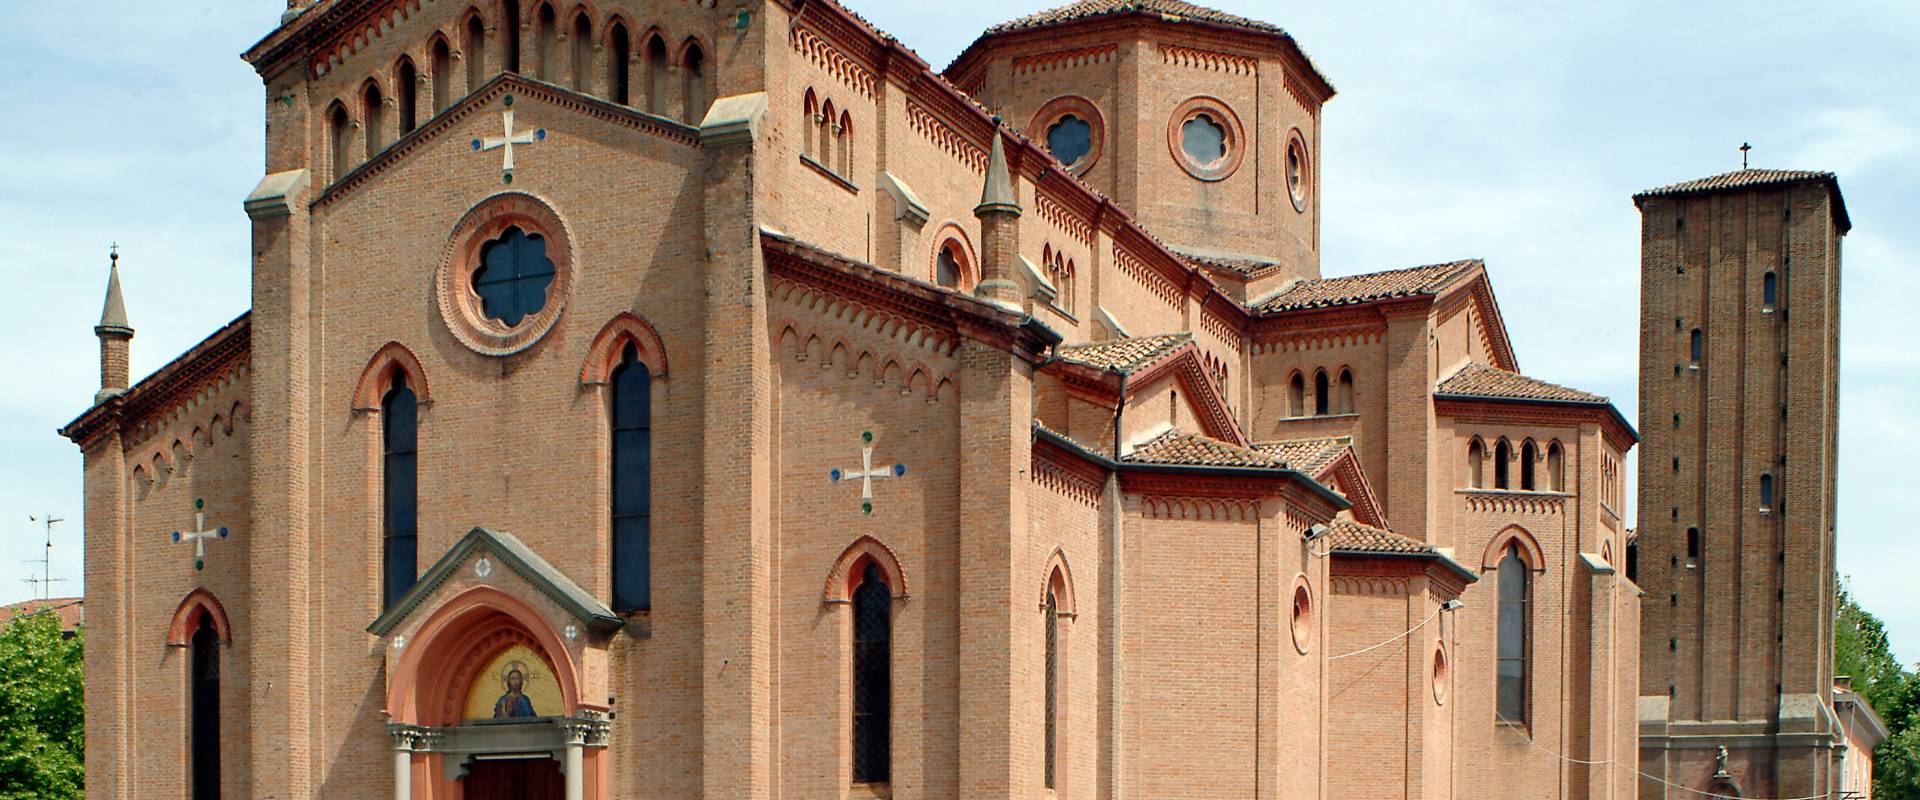 Chiesa di San Michele Arcangelo photo by Baraldi